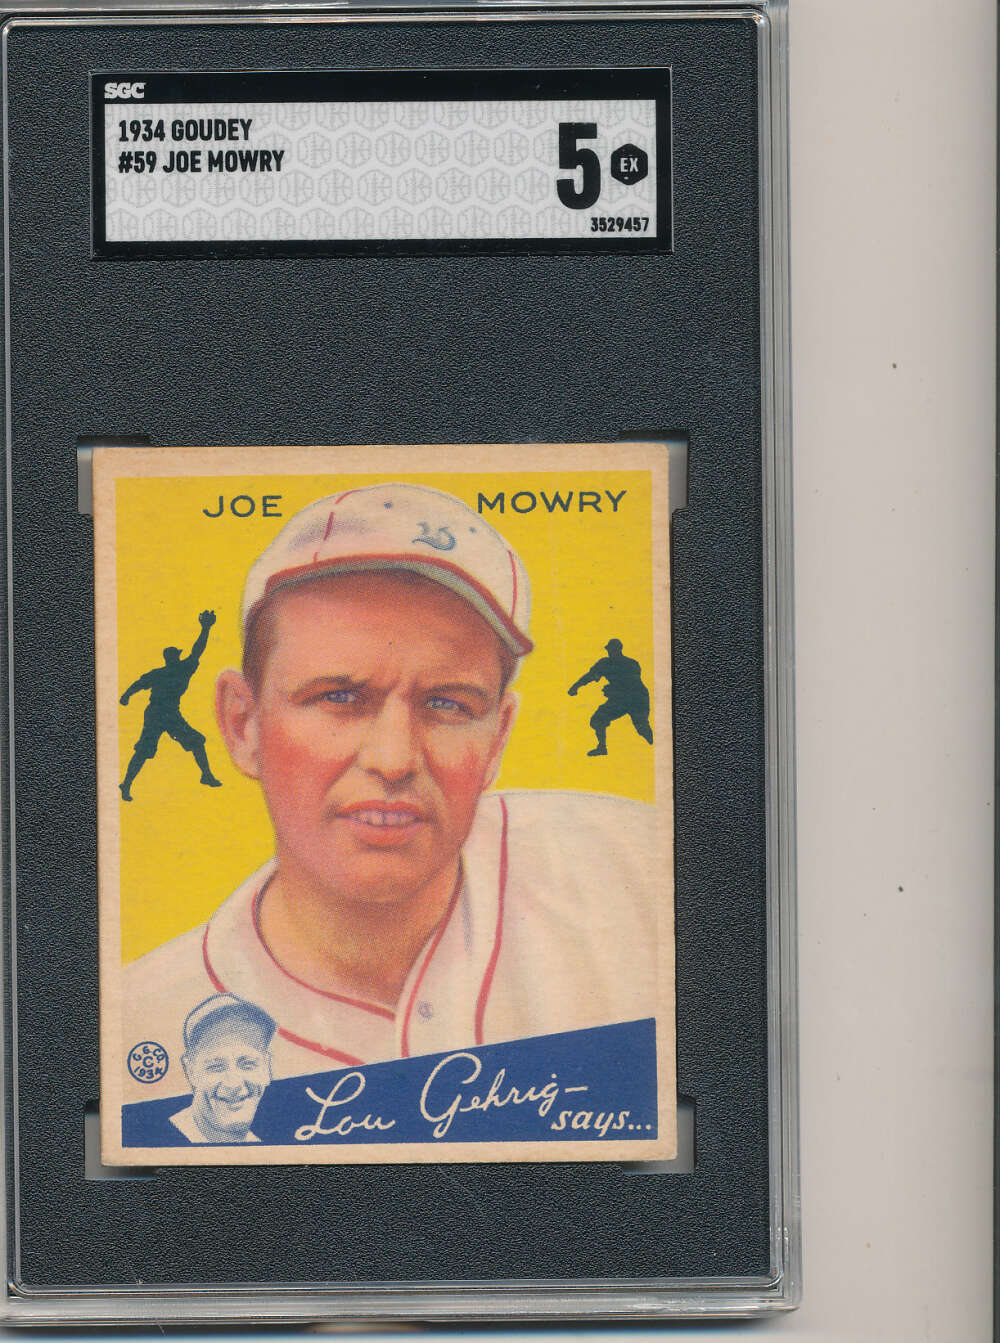 1934 Goudey Joe Mowry Boston Braves #59 card SGC 5 ex bxm3